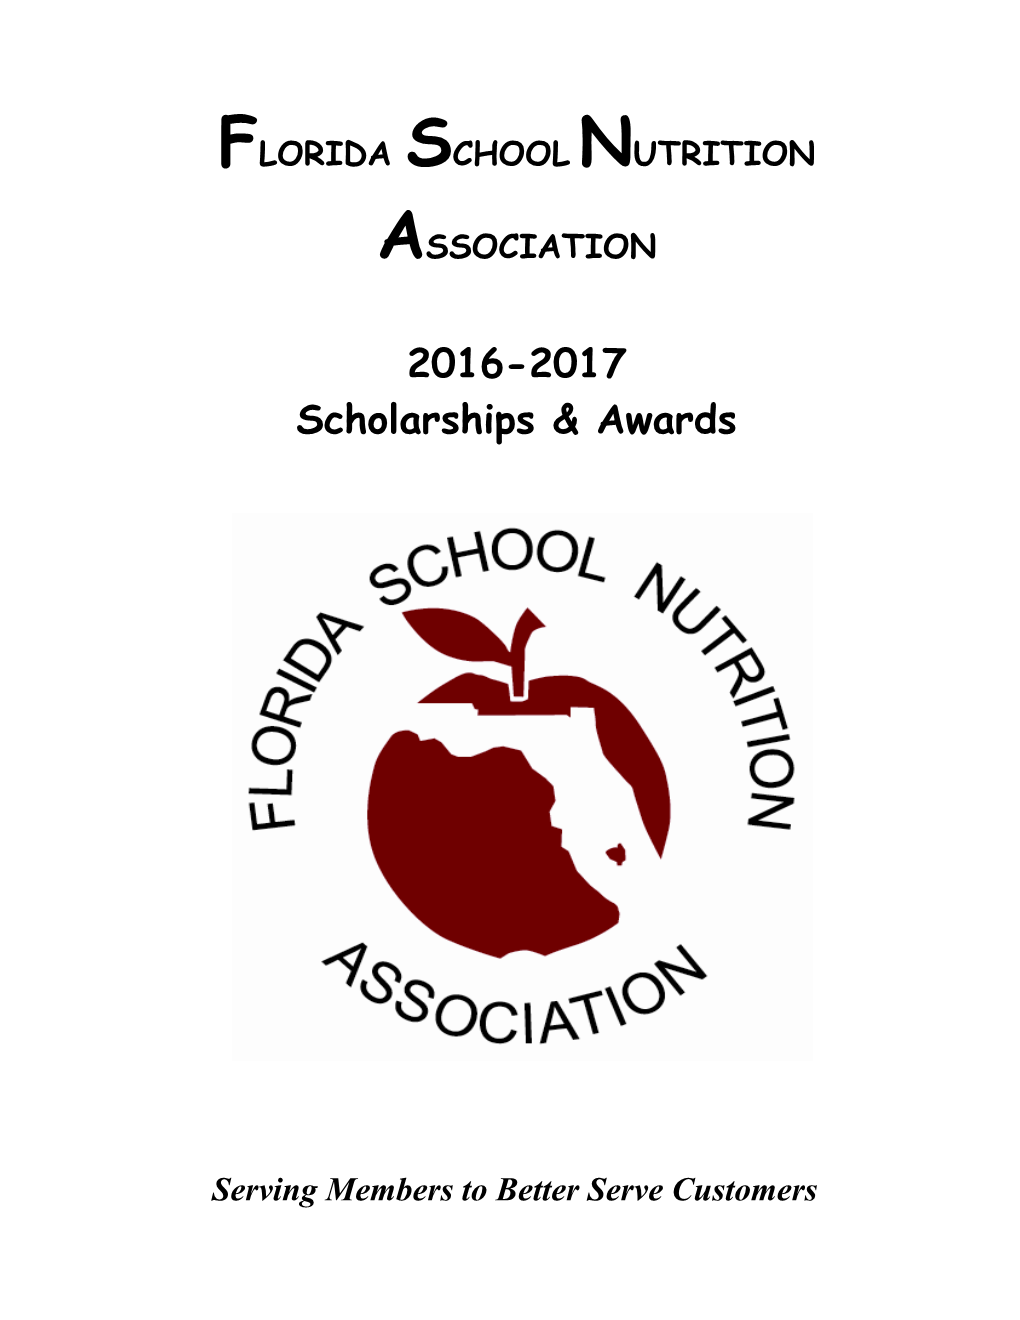 Florida School Food Service Association